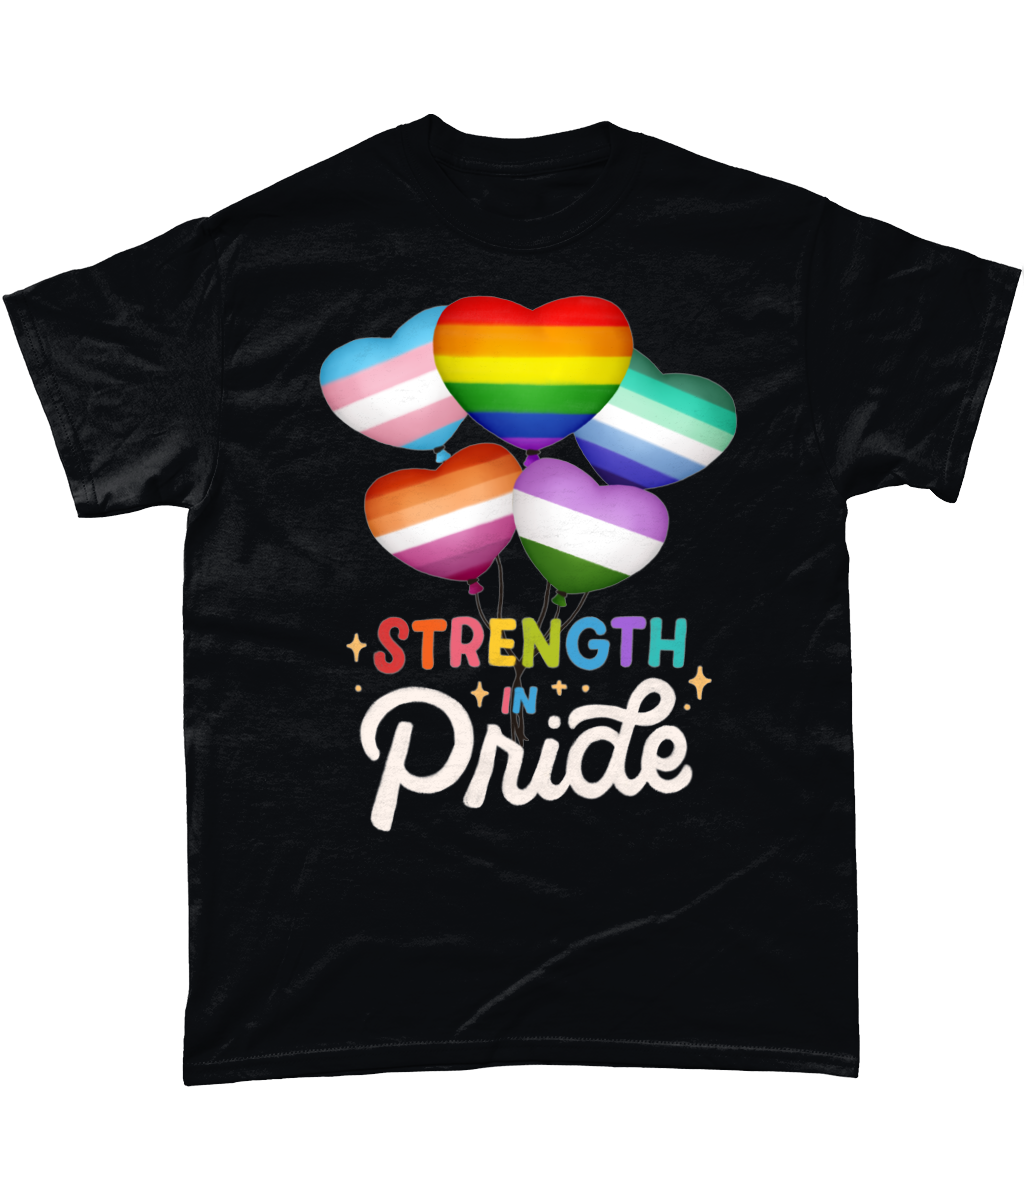 Strength in pride gay trans LGBTQIA T-Shirt